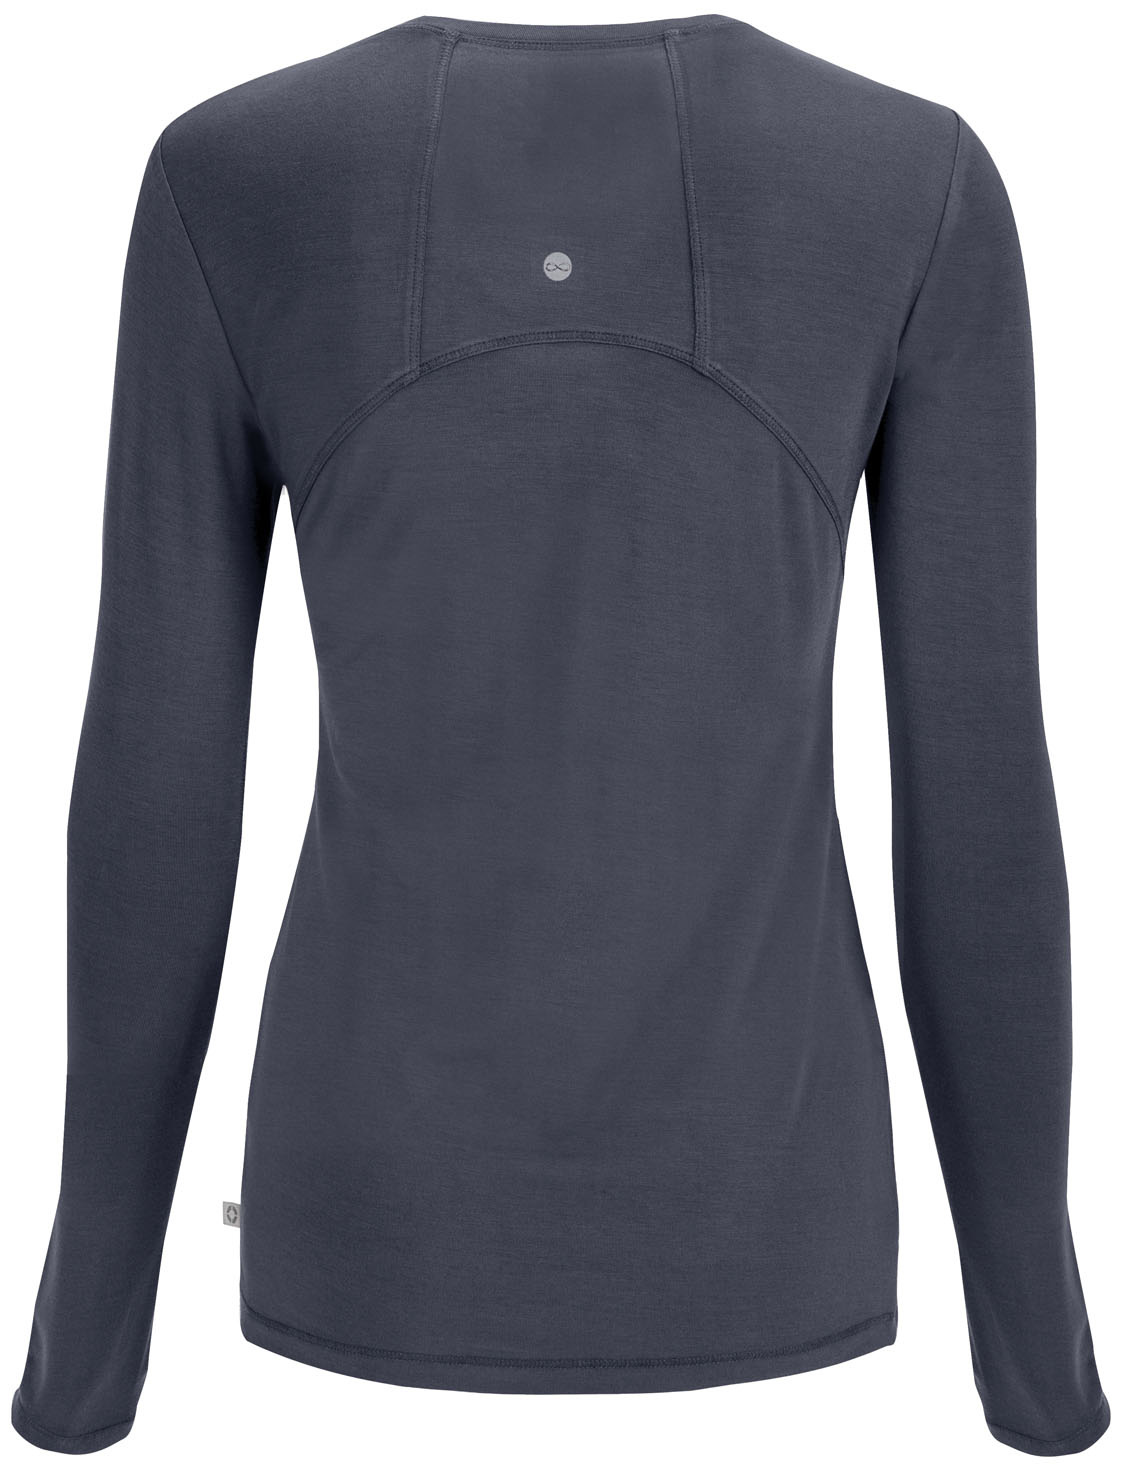 CHEROKEE Pewter Grey Long Sleeve Women's Underscrub Shirts 2626A